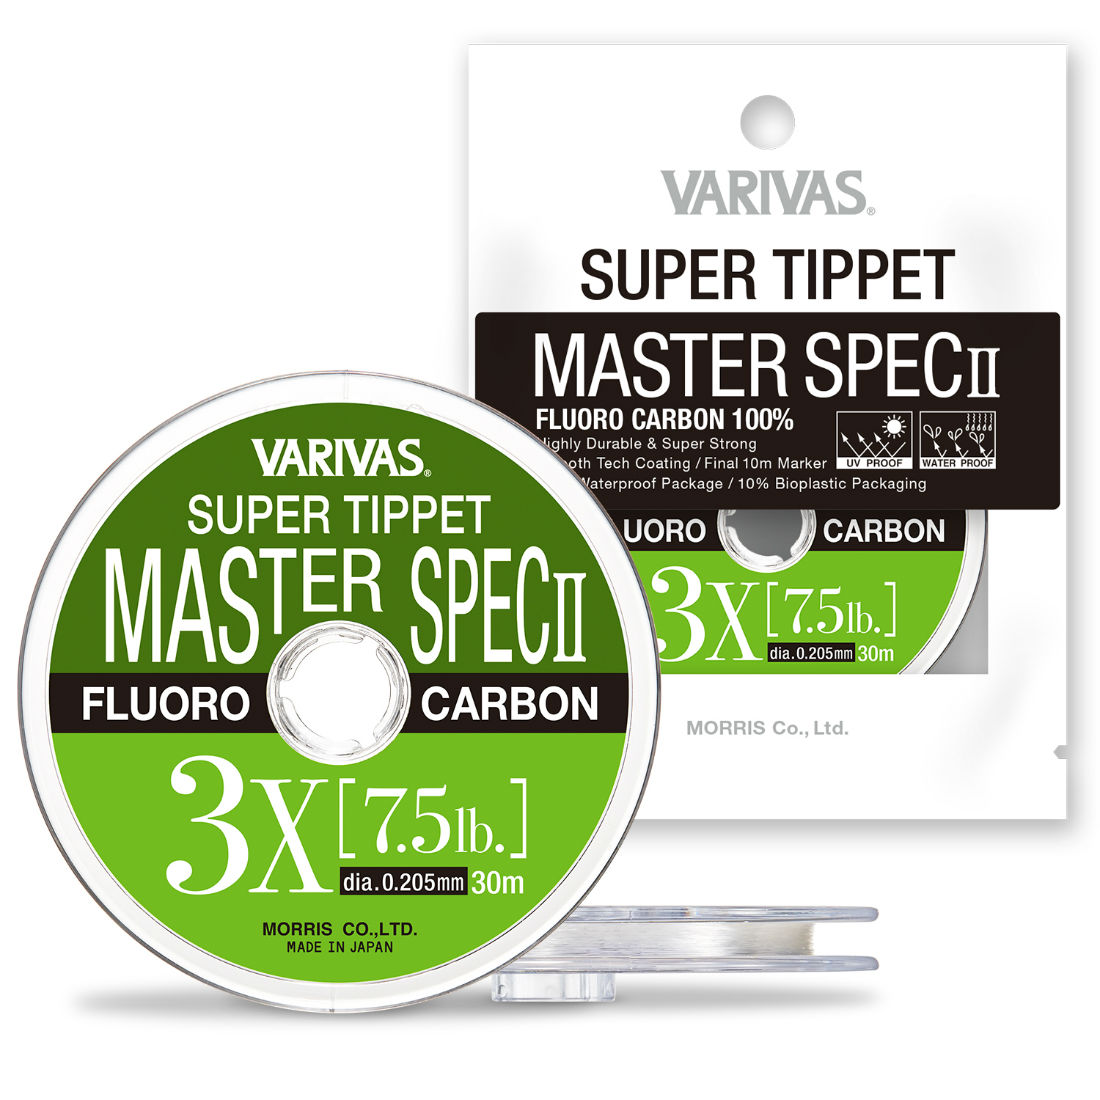 FIR VARIVAS SUPER TIPPET MASTER SPEC ll FLUORO 7X 30m 0.104mm 2.1lb